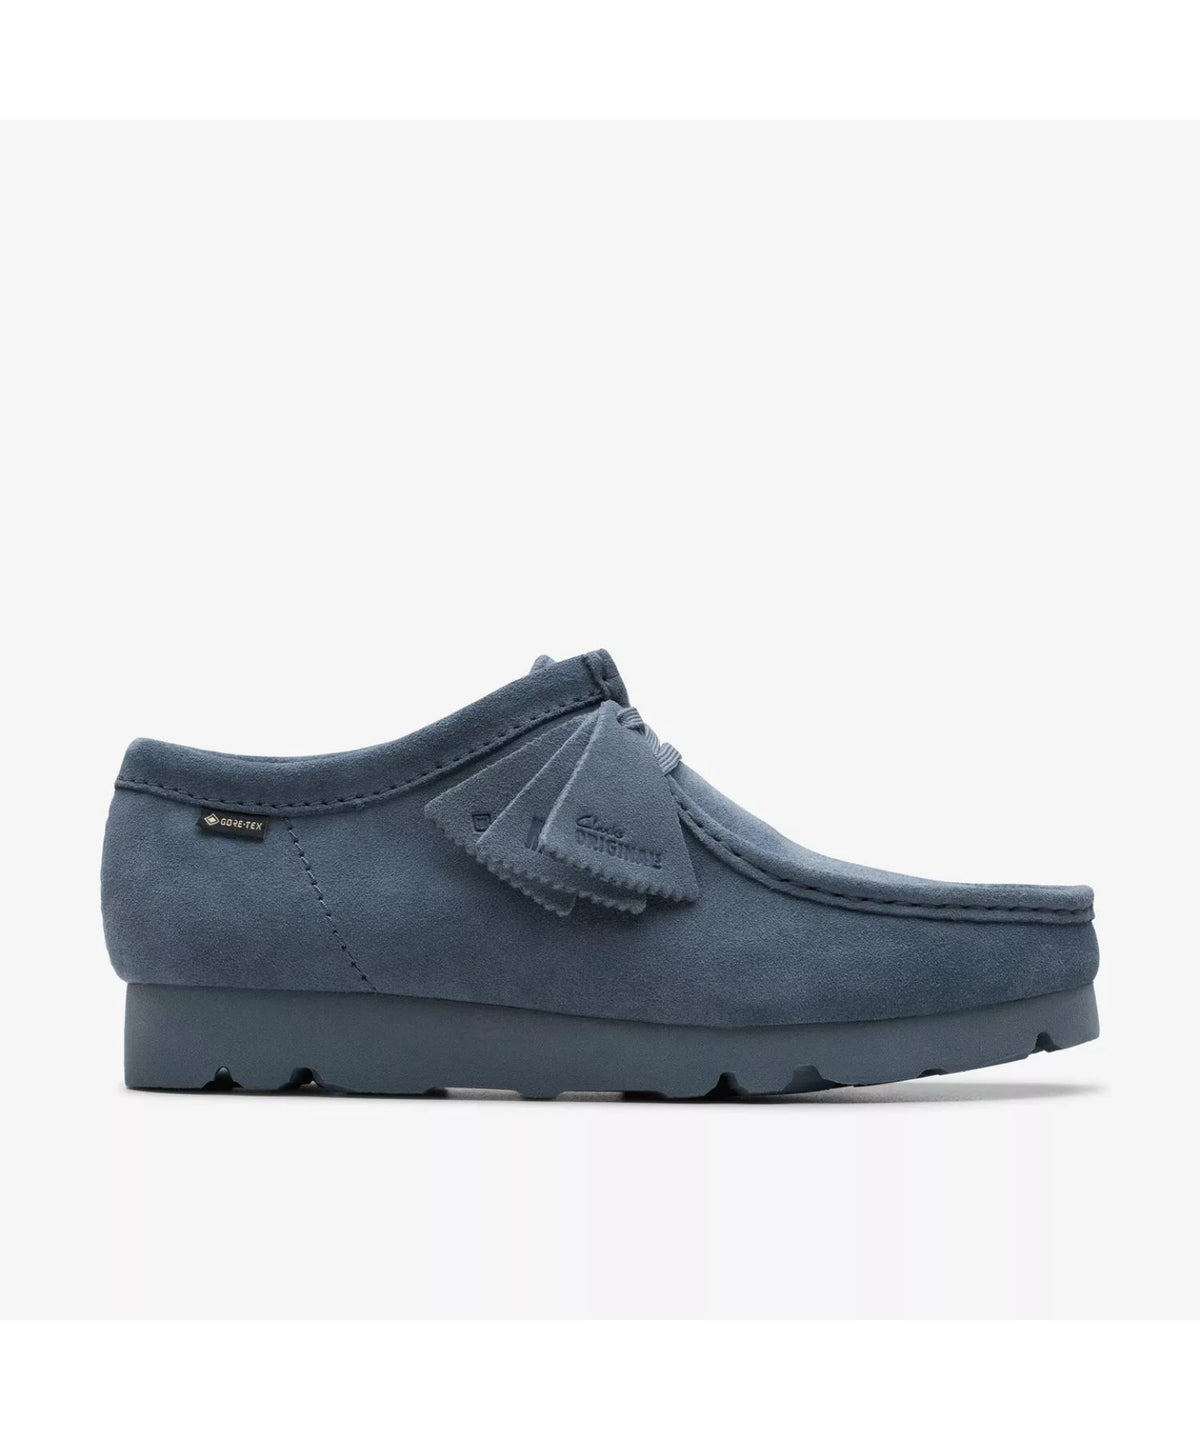 Wallabee GTX Blue/Grey Suede - Clarks (クラークス) - shoes